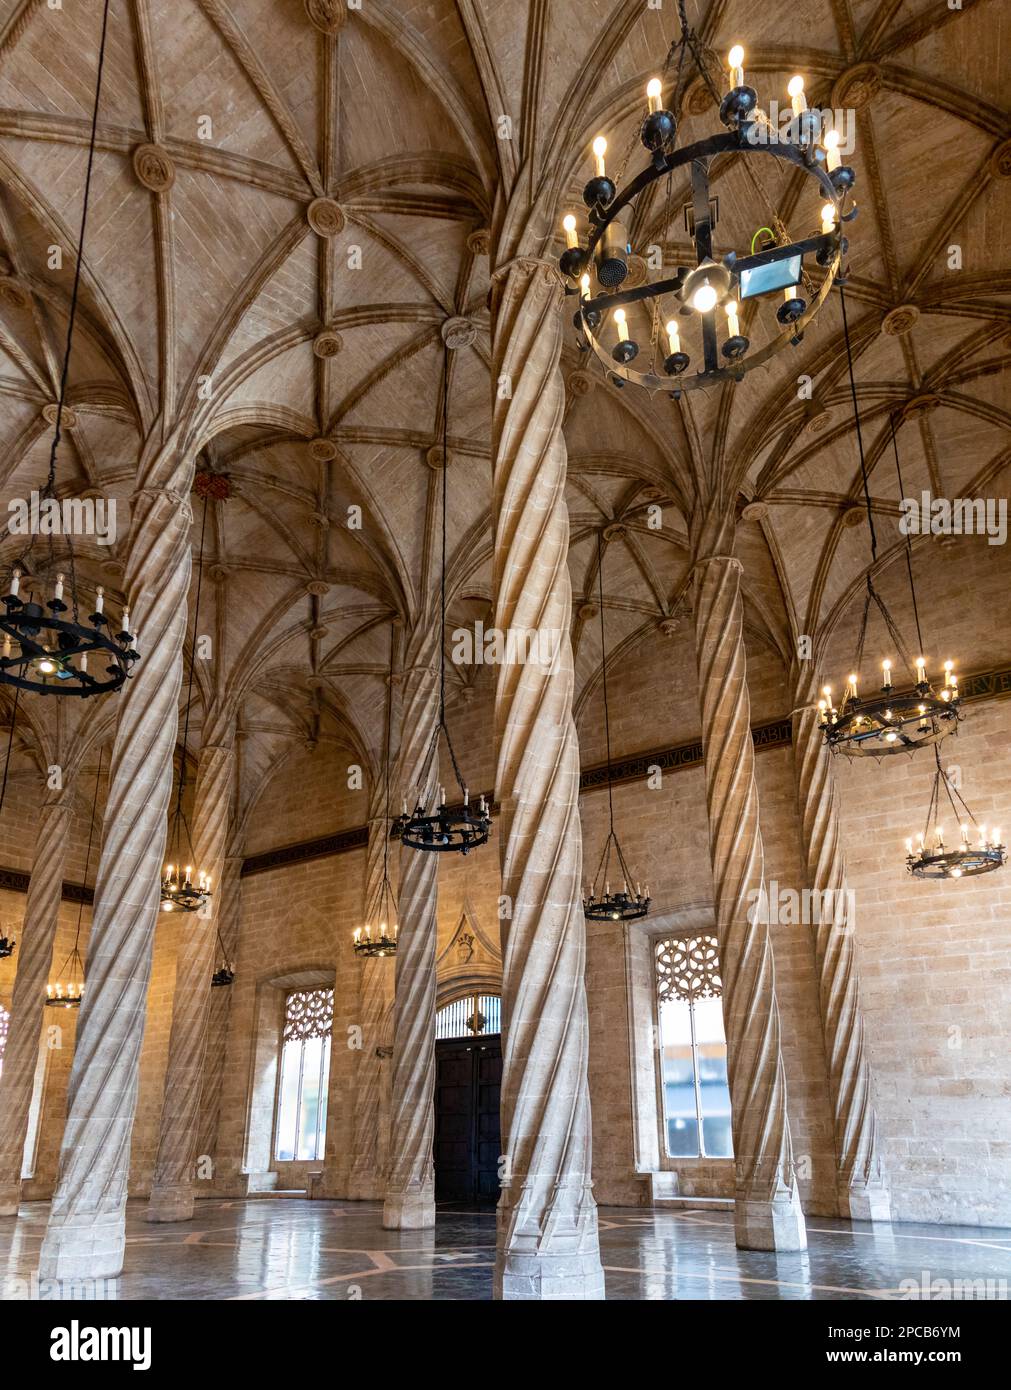 Lonja de Seda, Valence, obra maestra del gótico civil valenciano. Sala de columnas, Espagne Banque D'Images